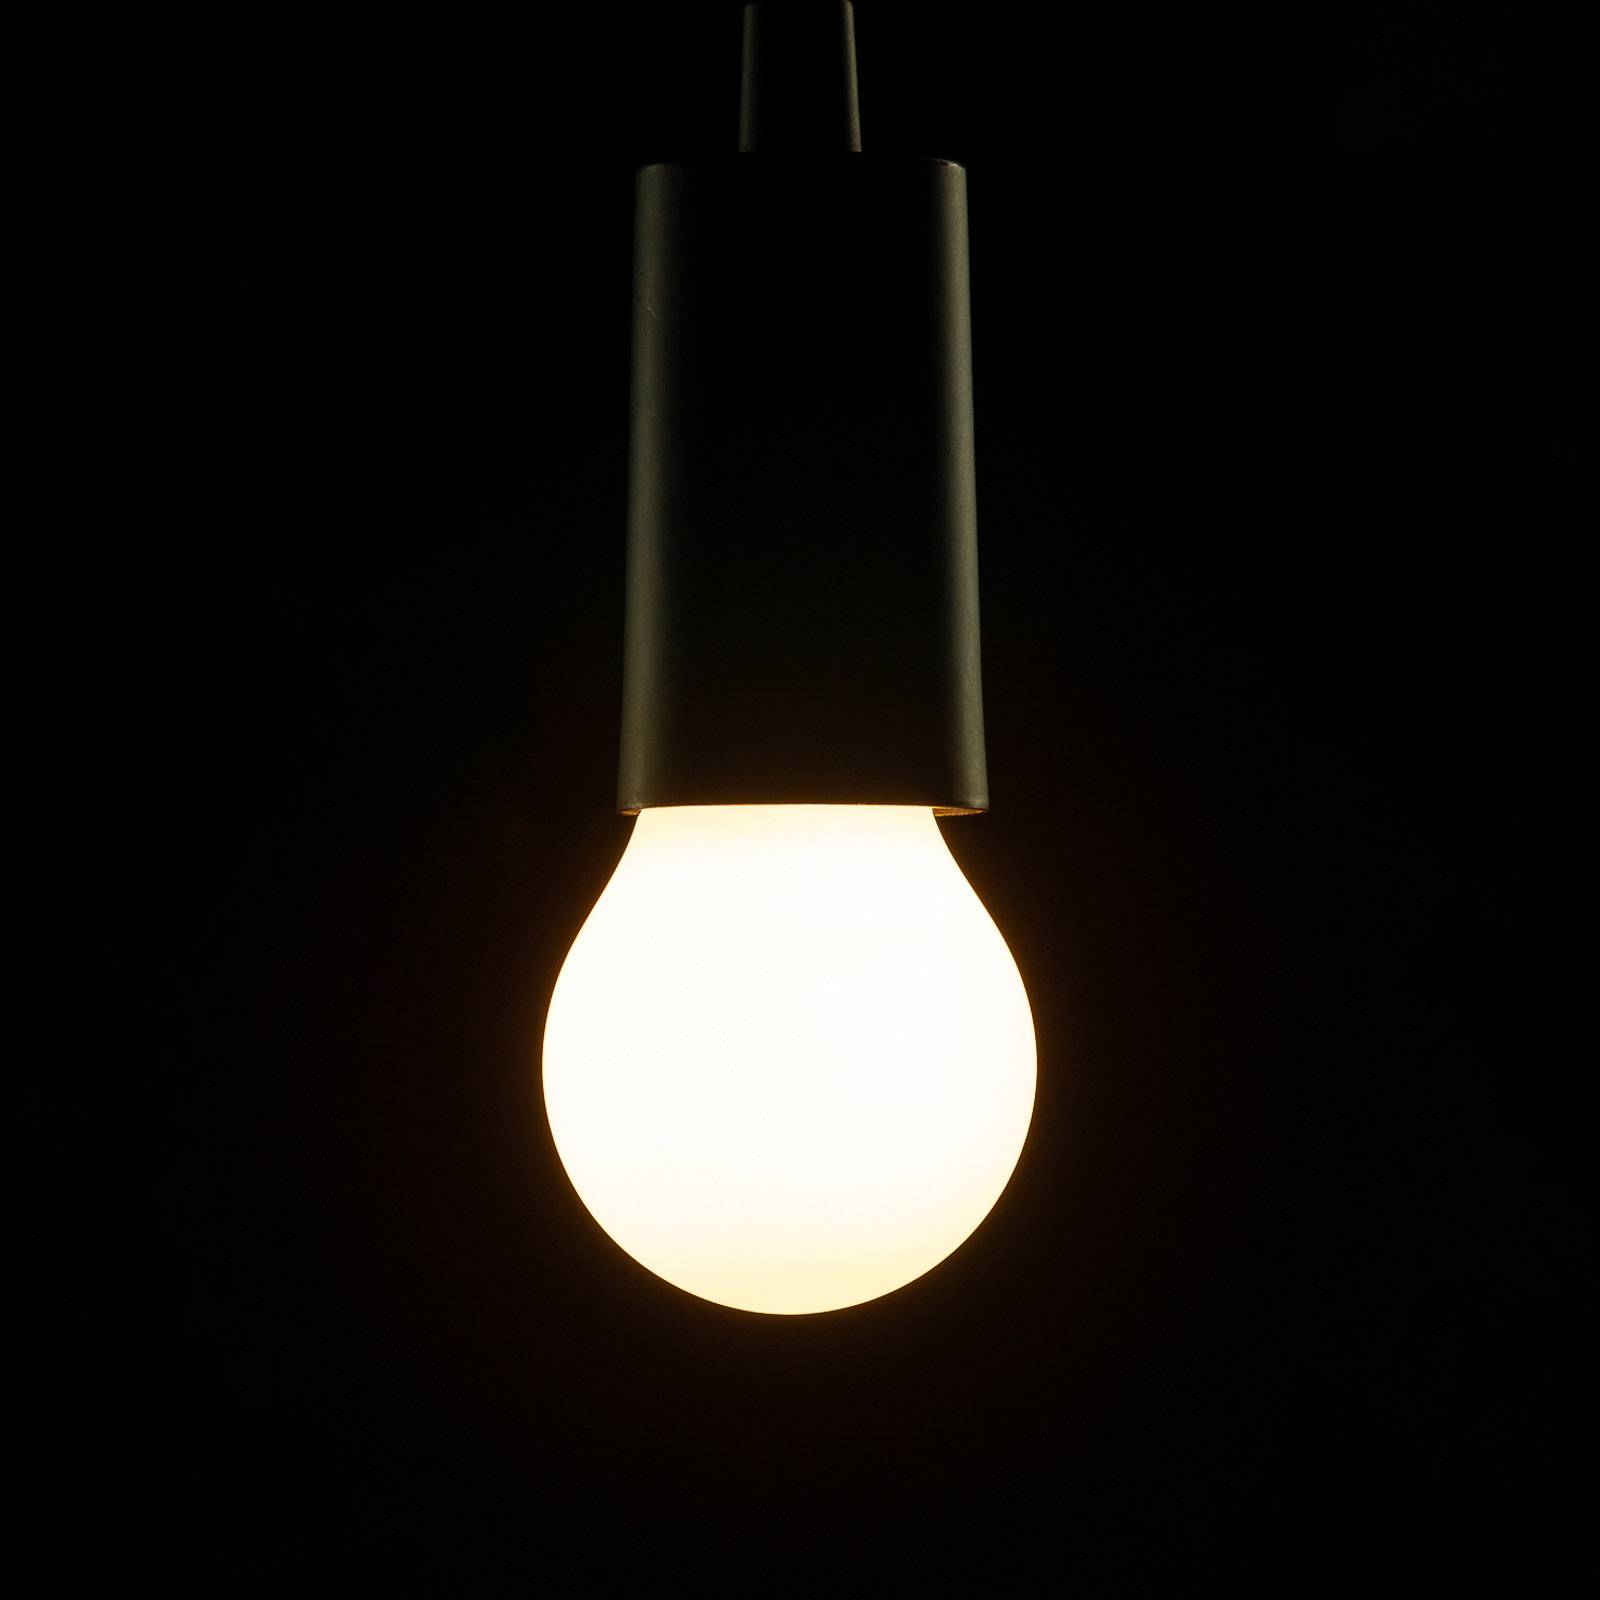 SEGULA-LED-lamppu E27 5 W opal ambient dimming